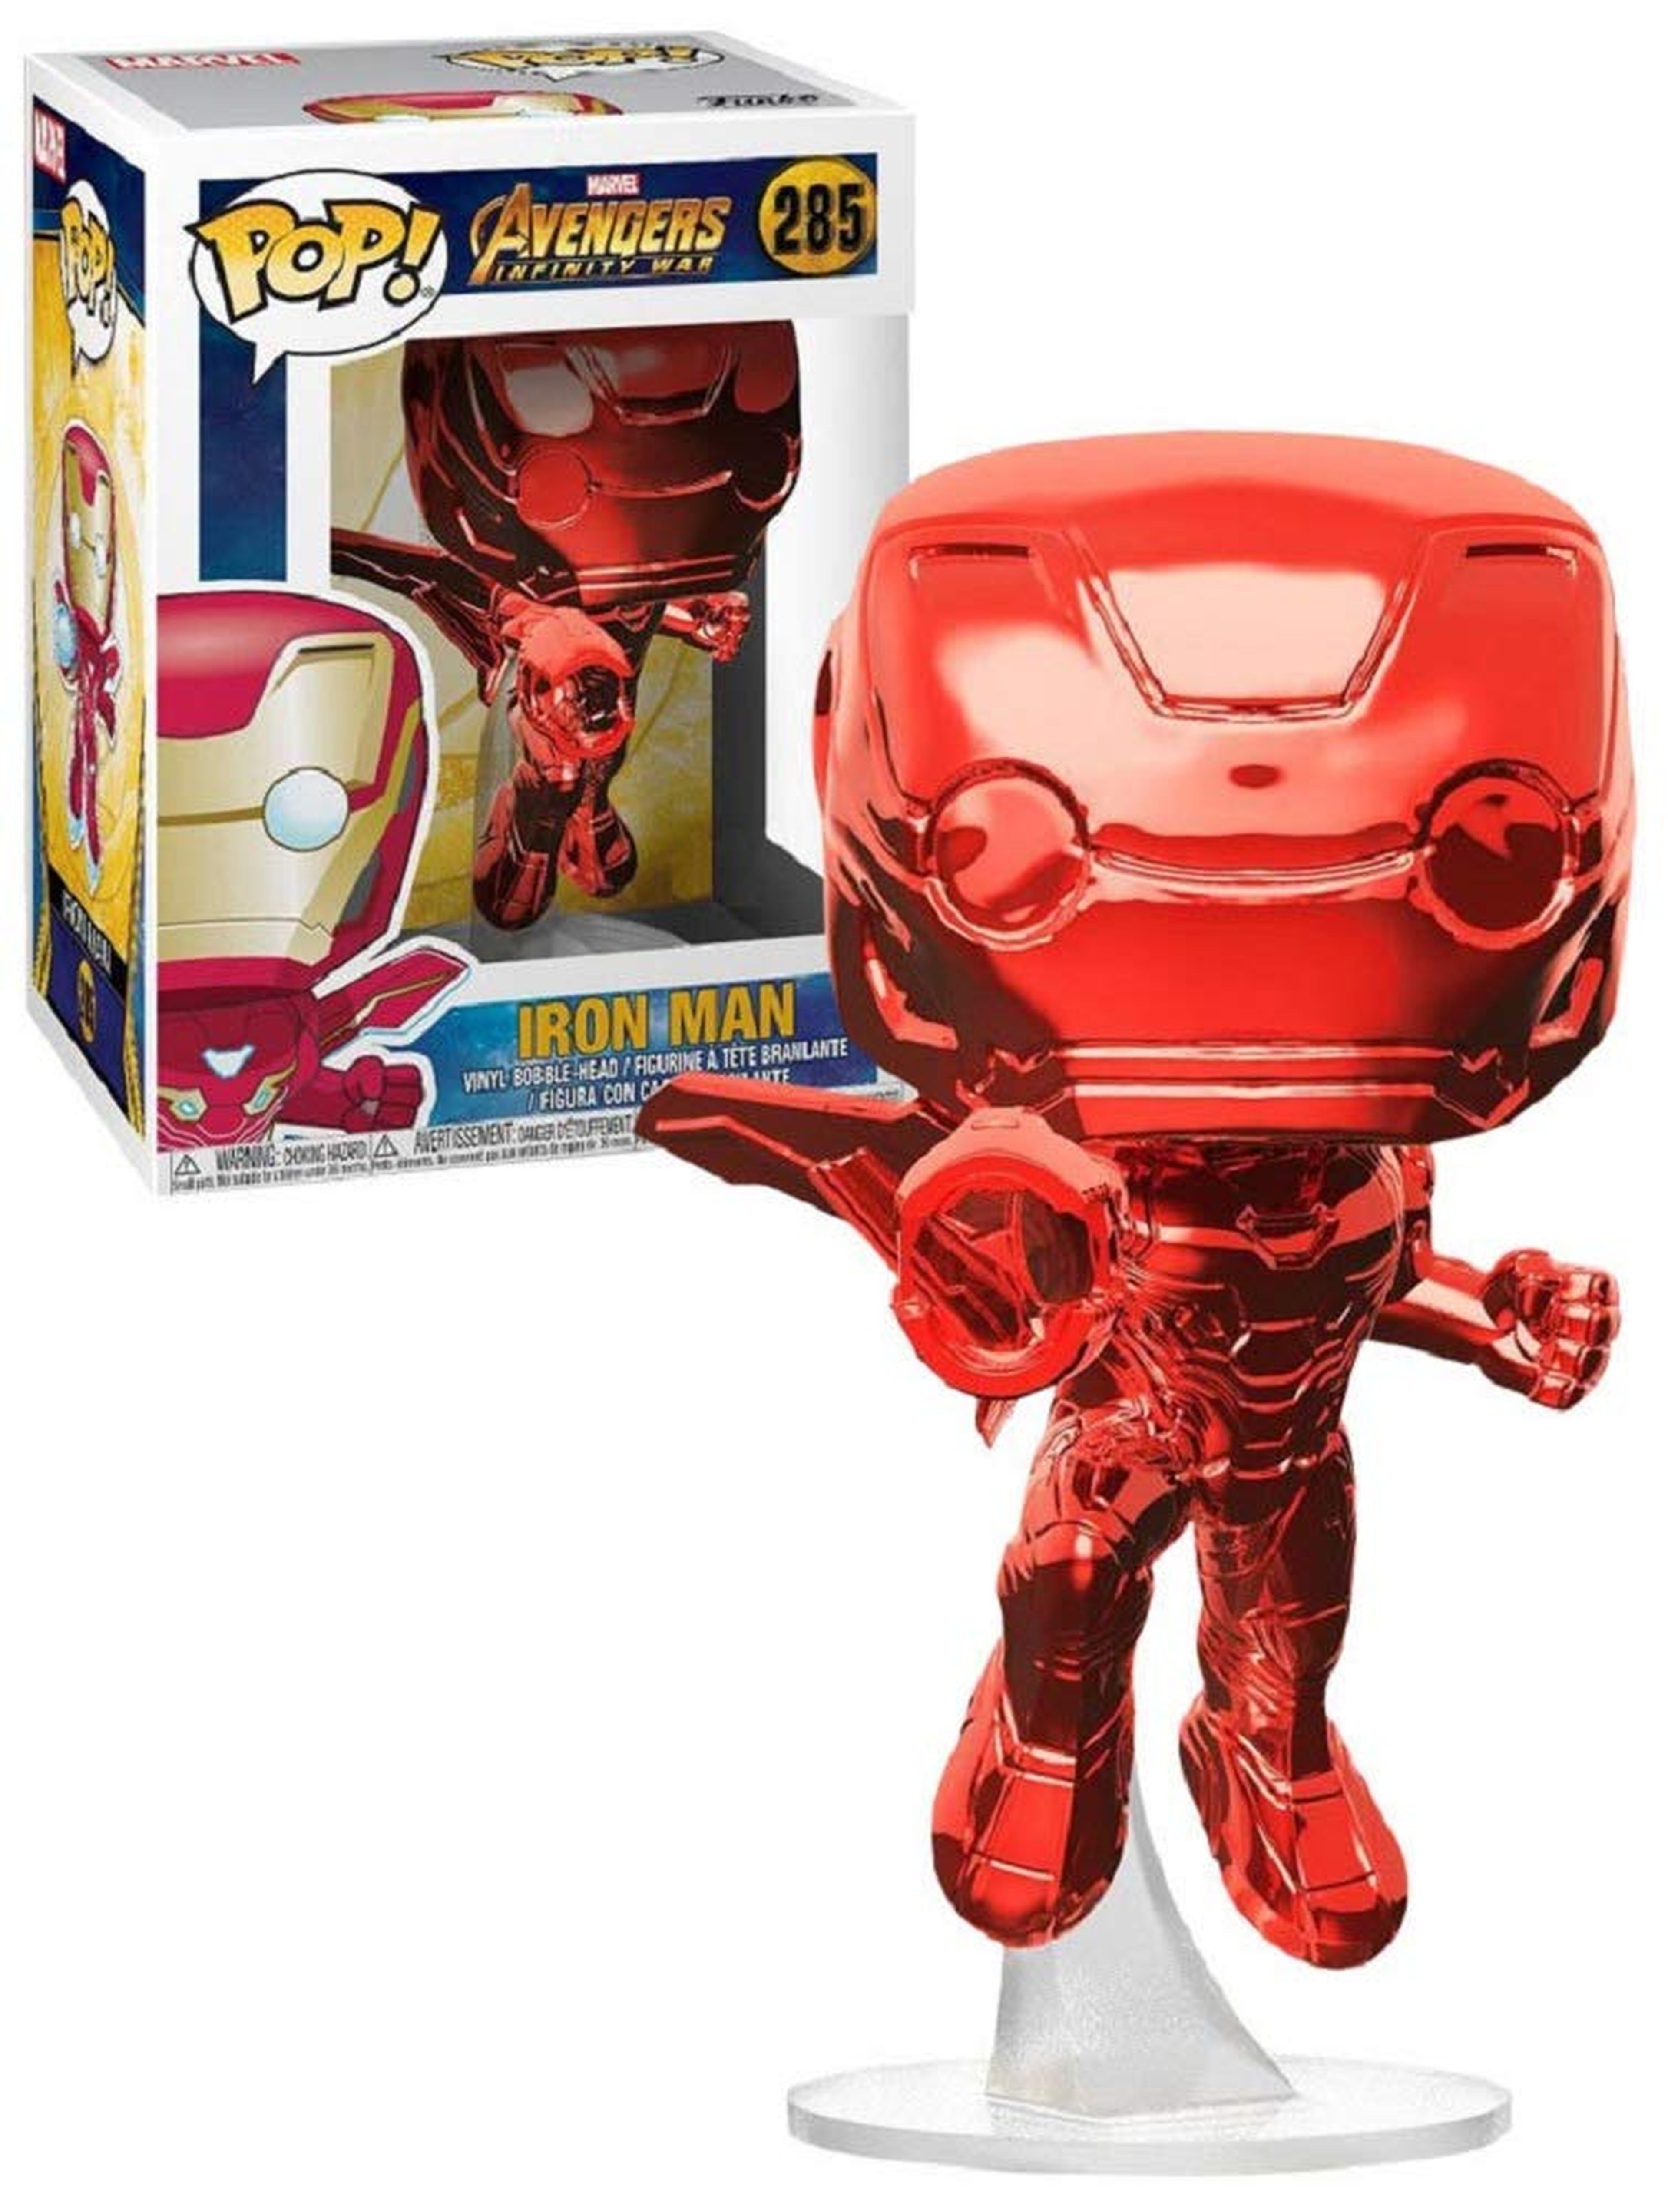 Iron Man (Red Chrome)